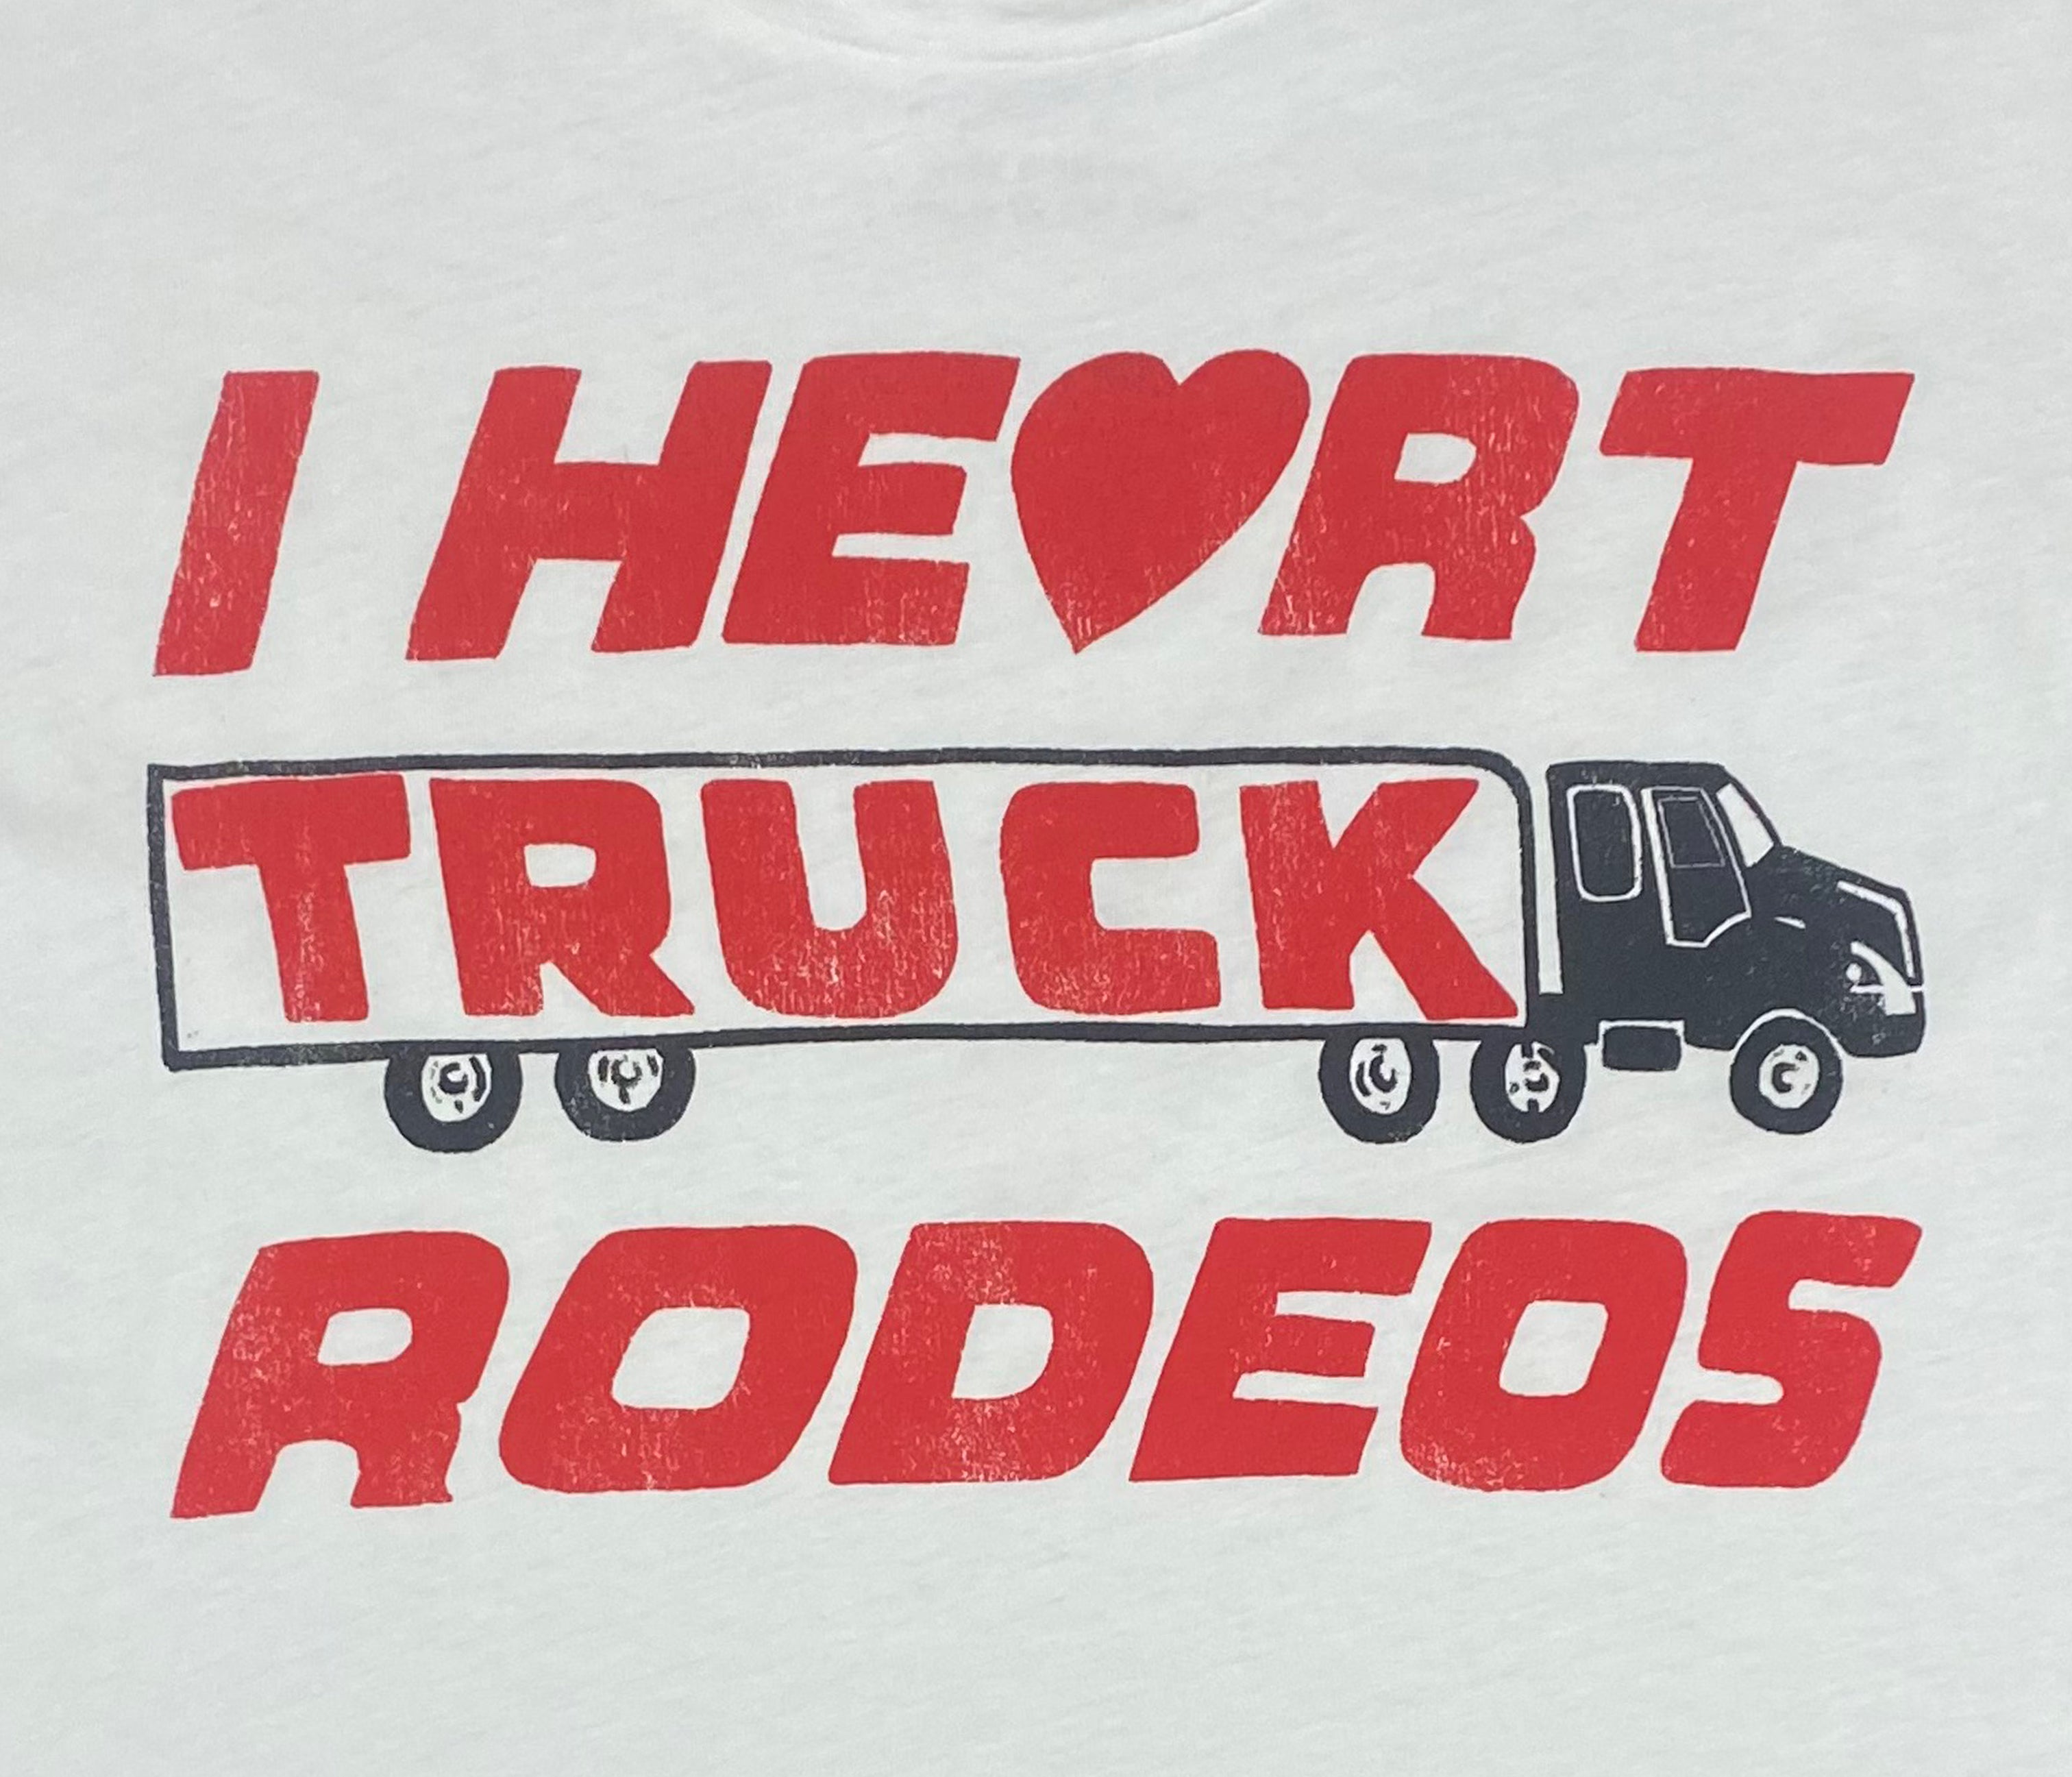 I heart Truck Rodeo's Cut Off Crop Tee